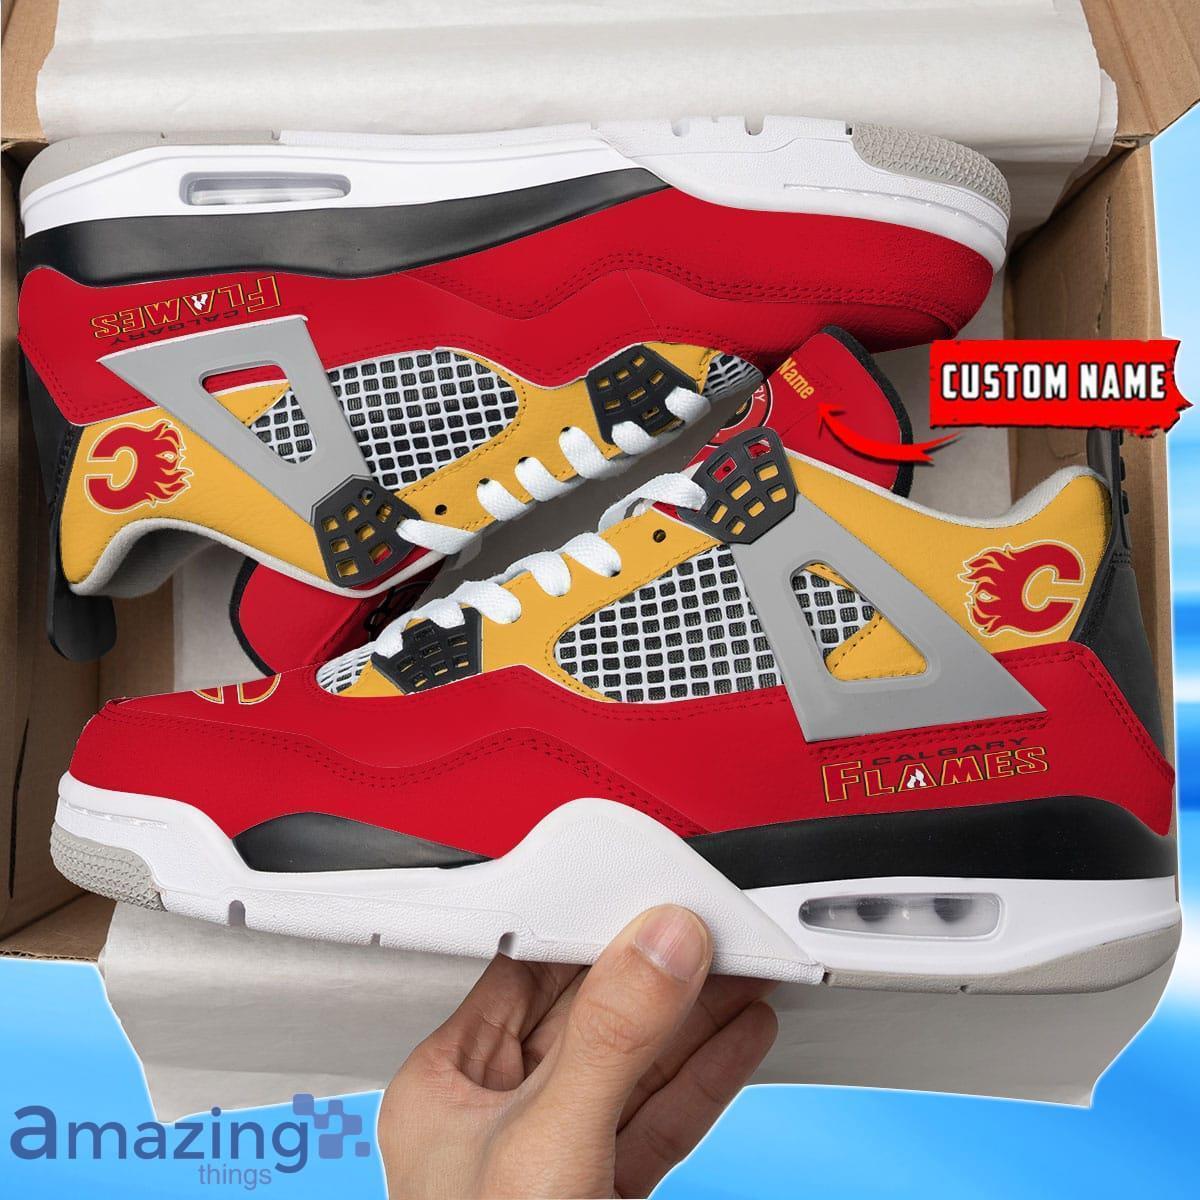 Calgary Flames Custom Name Air Jordan 4 Shoes Impressive Gift For Men Women Product Photo 1